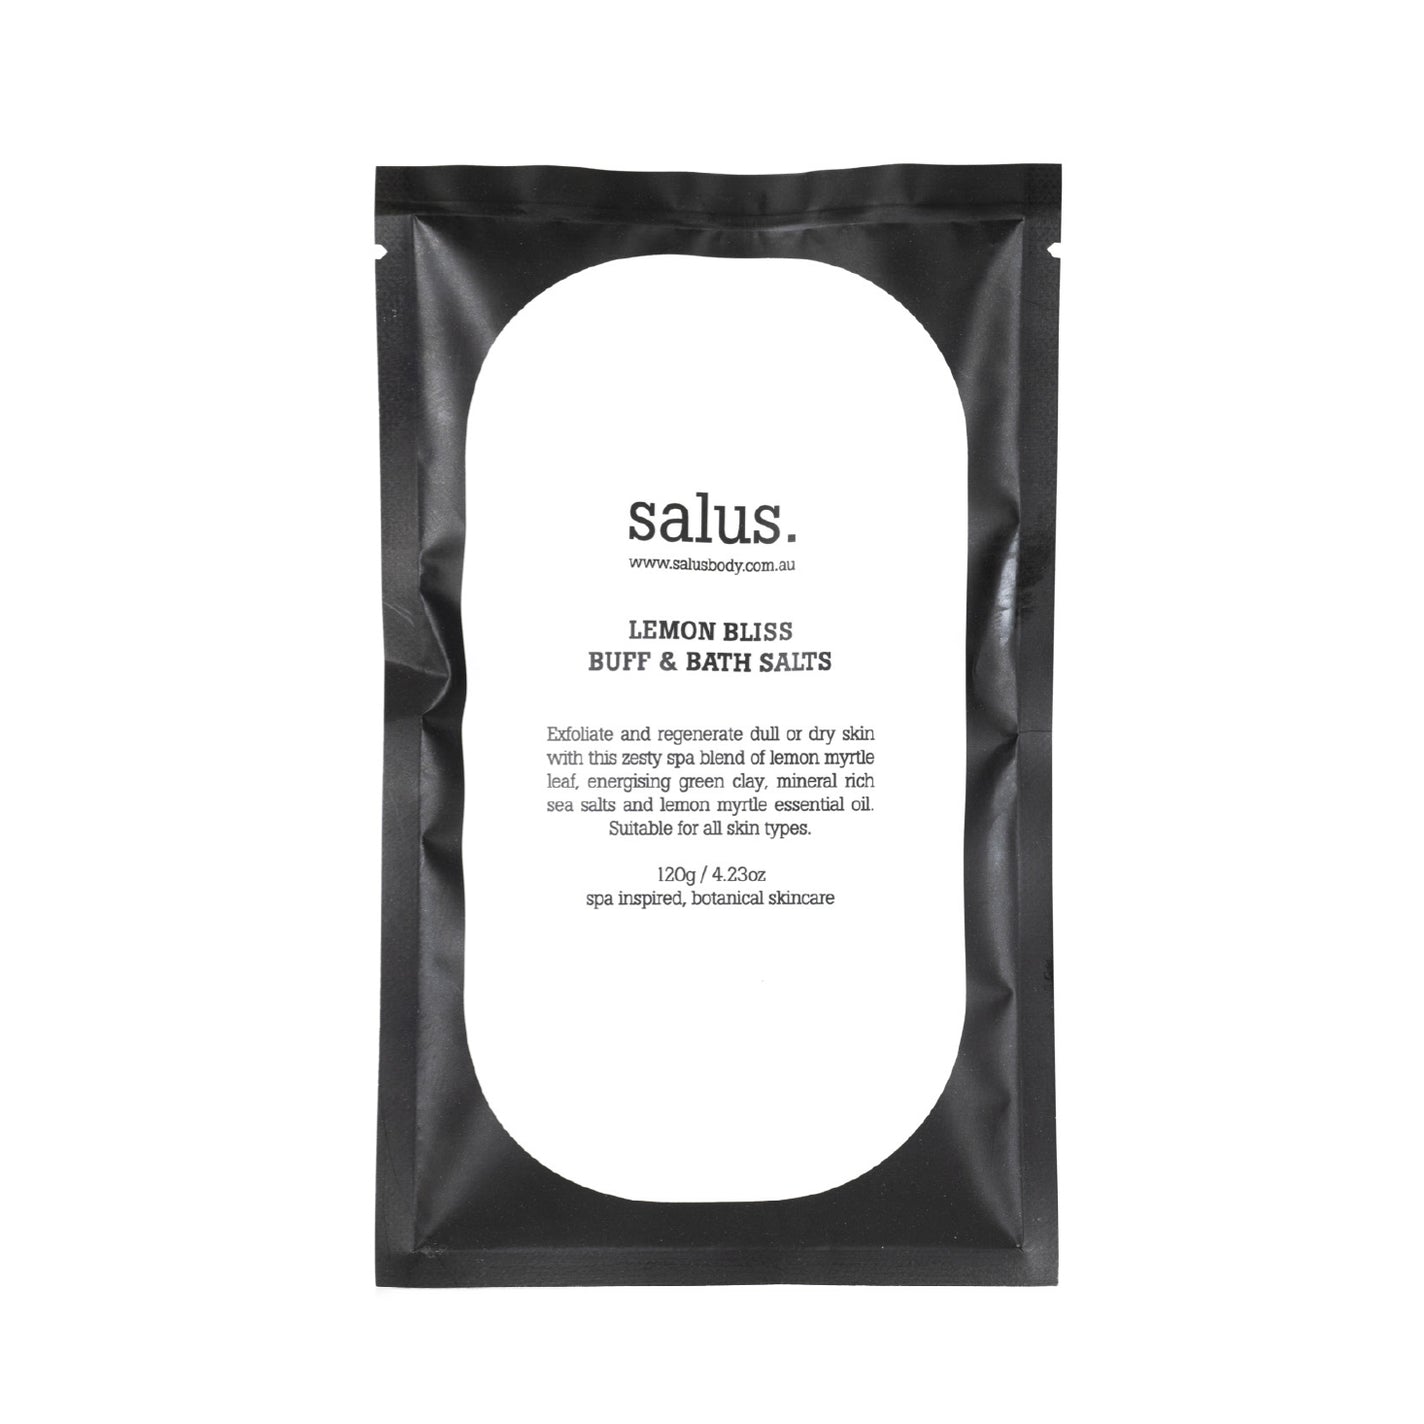 Salus Buff & Bath Salt Sachet - Lemon Bliss